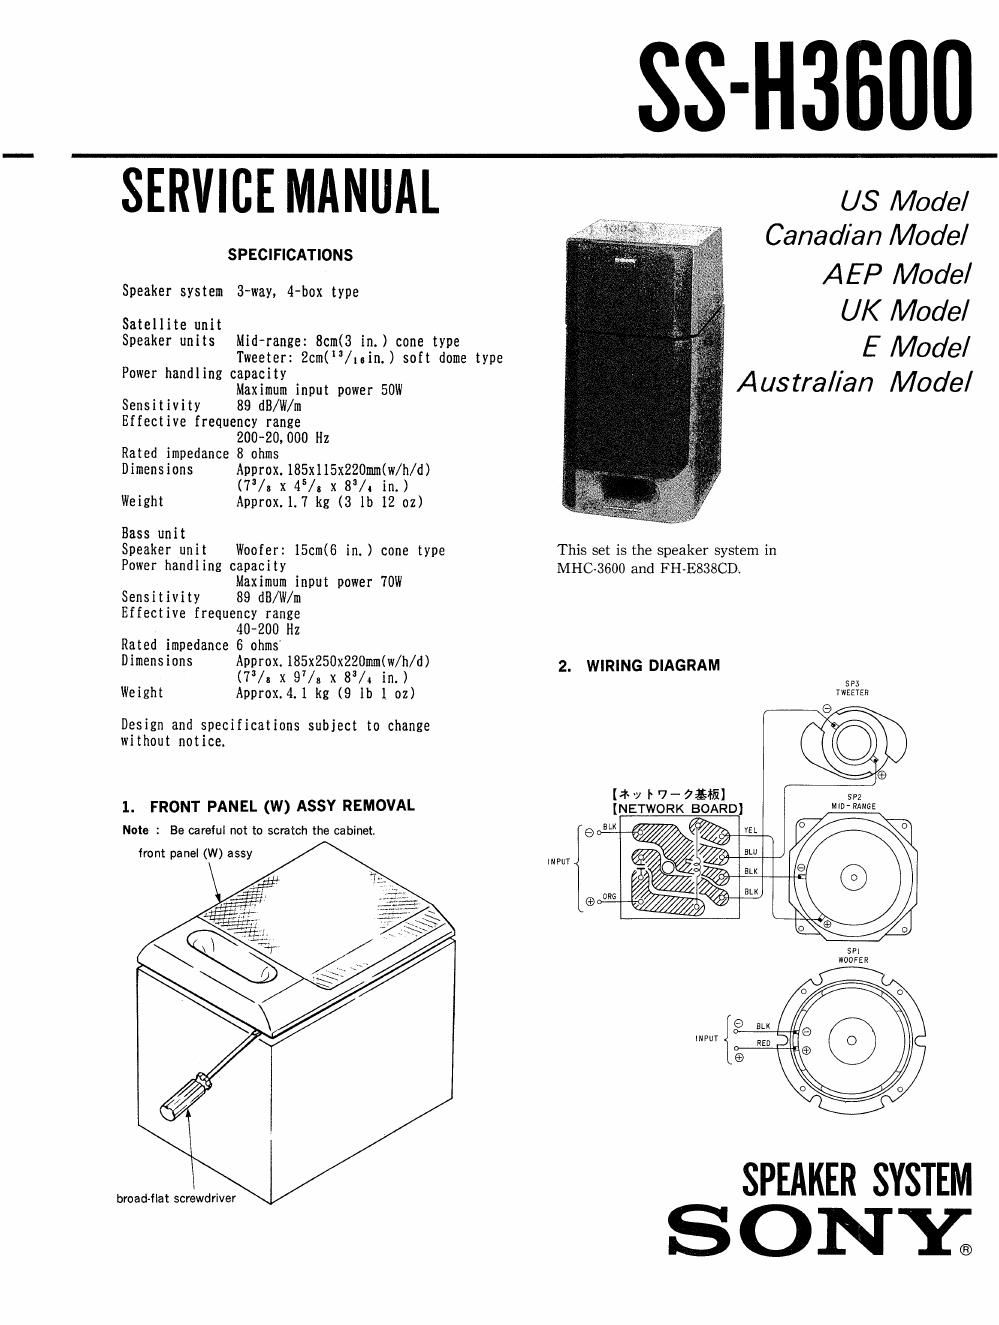 sony ss h 3600 service manual